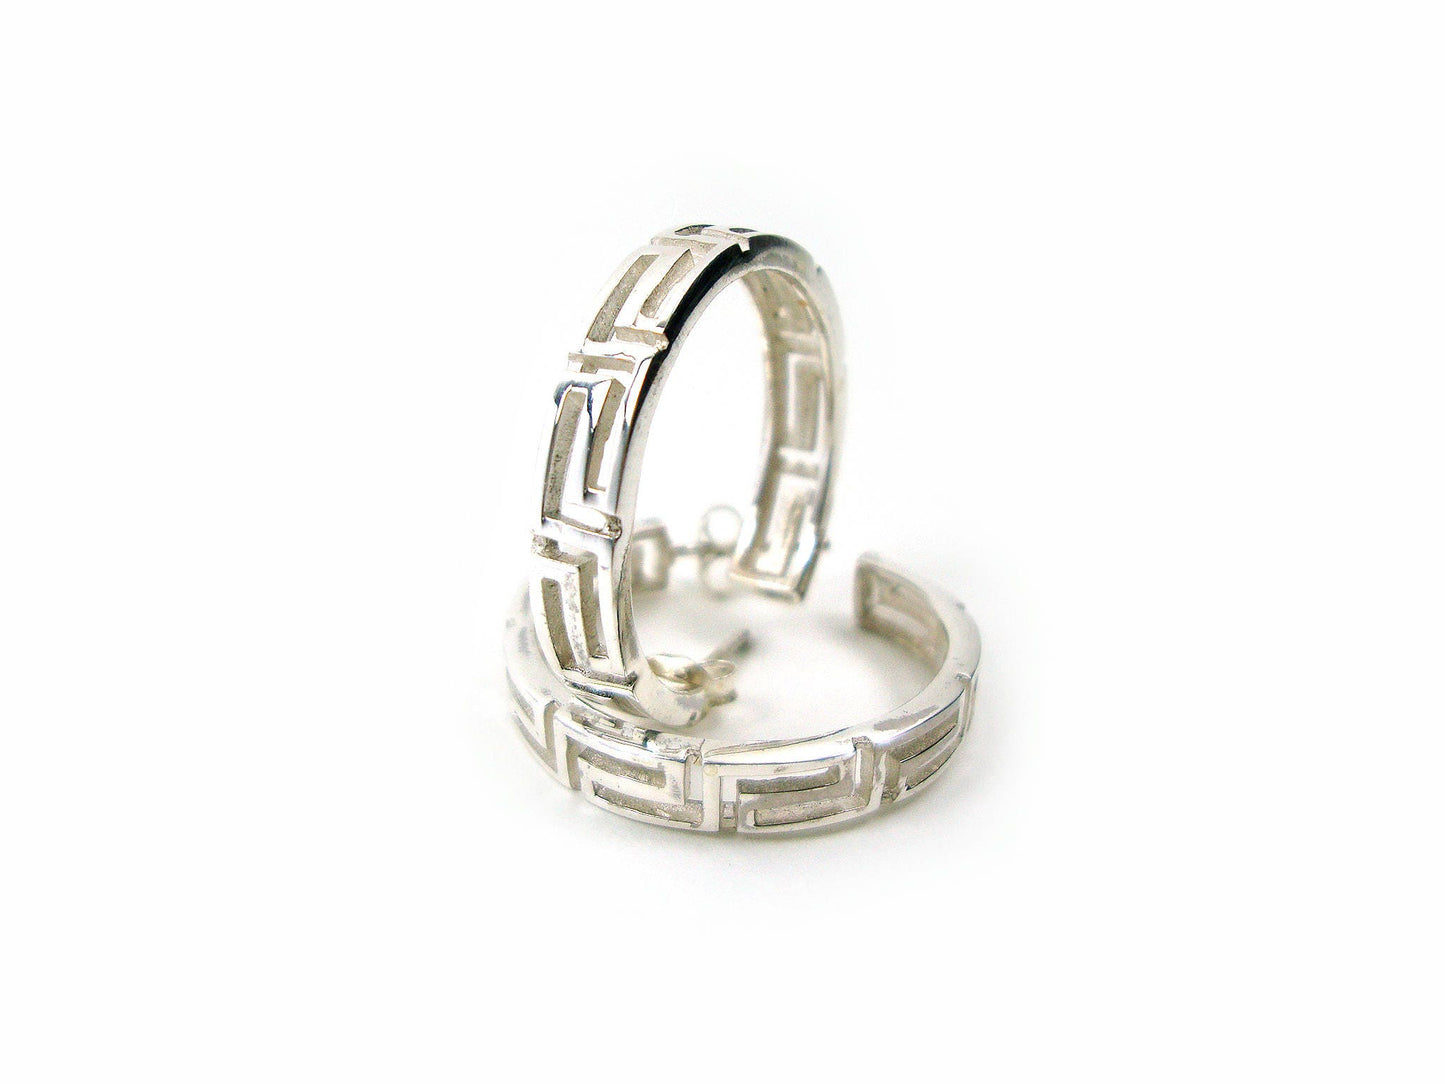 Griechische Ohrringe aus Sterlingsilber 925, griechische Ewigkeitsschlüssel-Creolen 27 mm, griechische Ohrringe, Boucles d'oreilles grecques